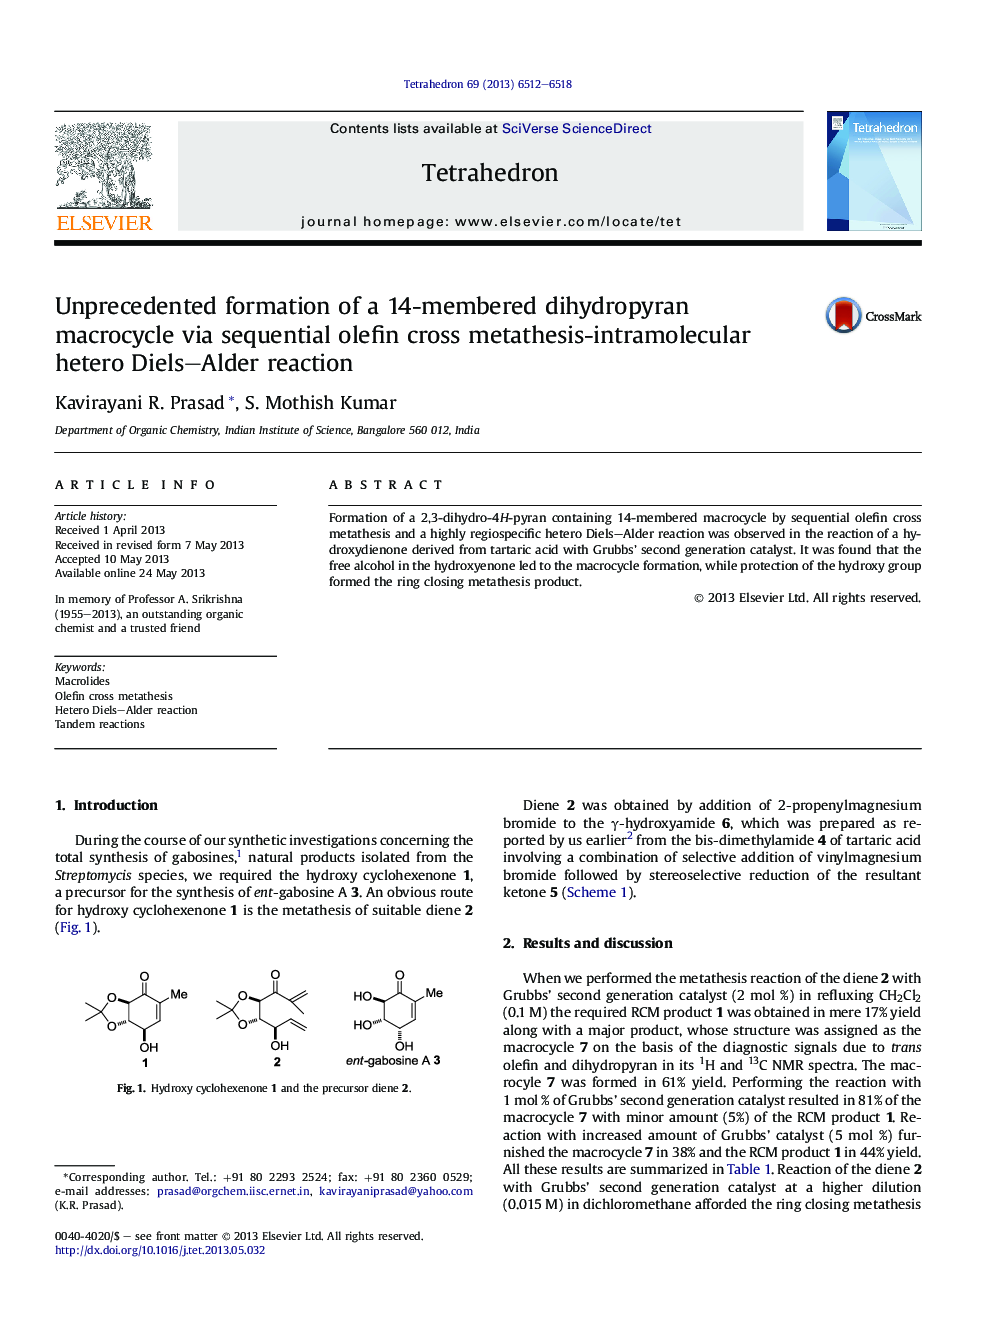 Unprecedented formation of a 14-membered dihydropyran macrocycle via sequential olefin cross metathesis-intramolecular hetero Diels–Alder reaction